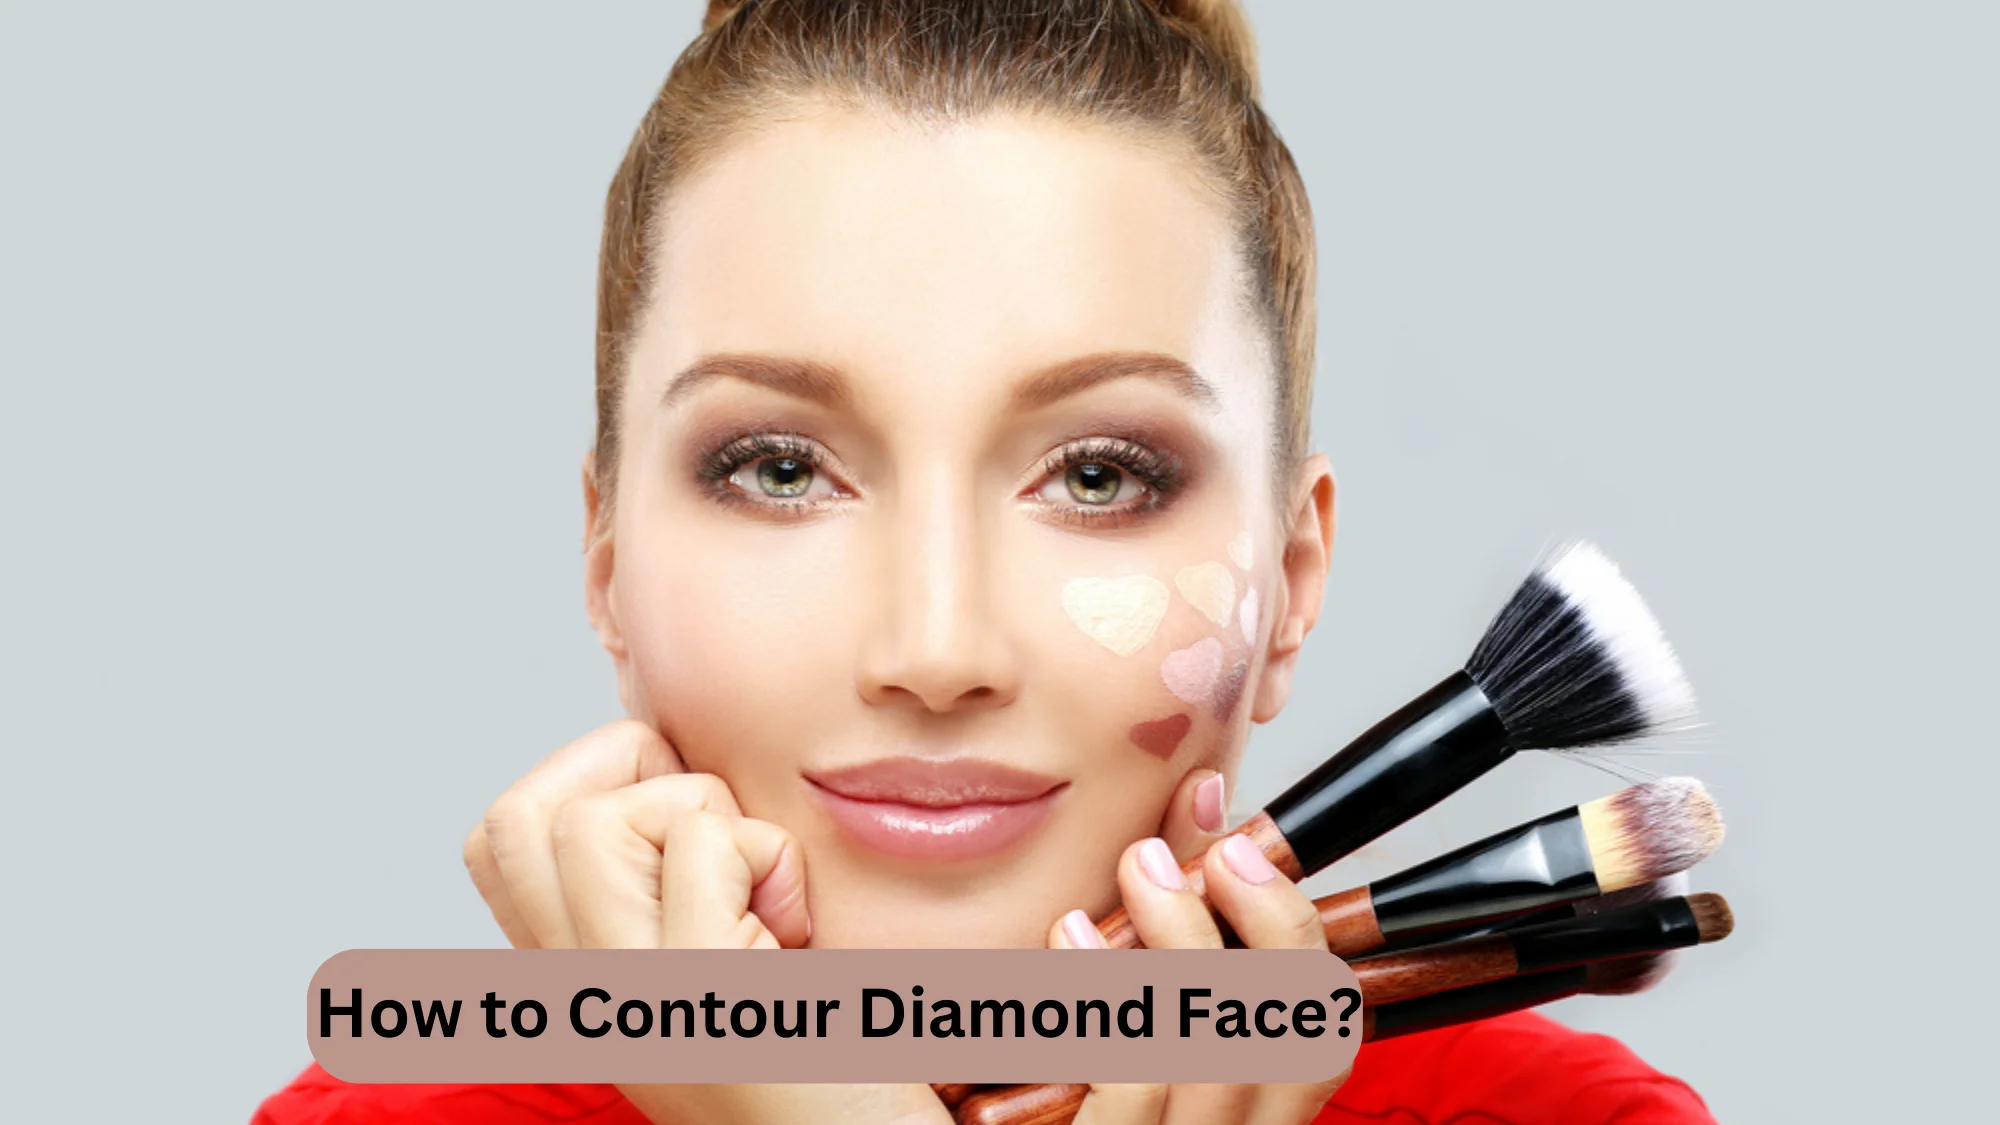 How to Contour Diamond Face?